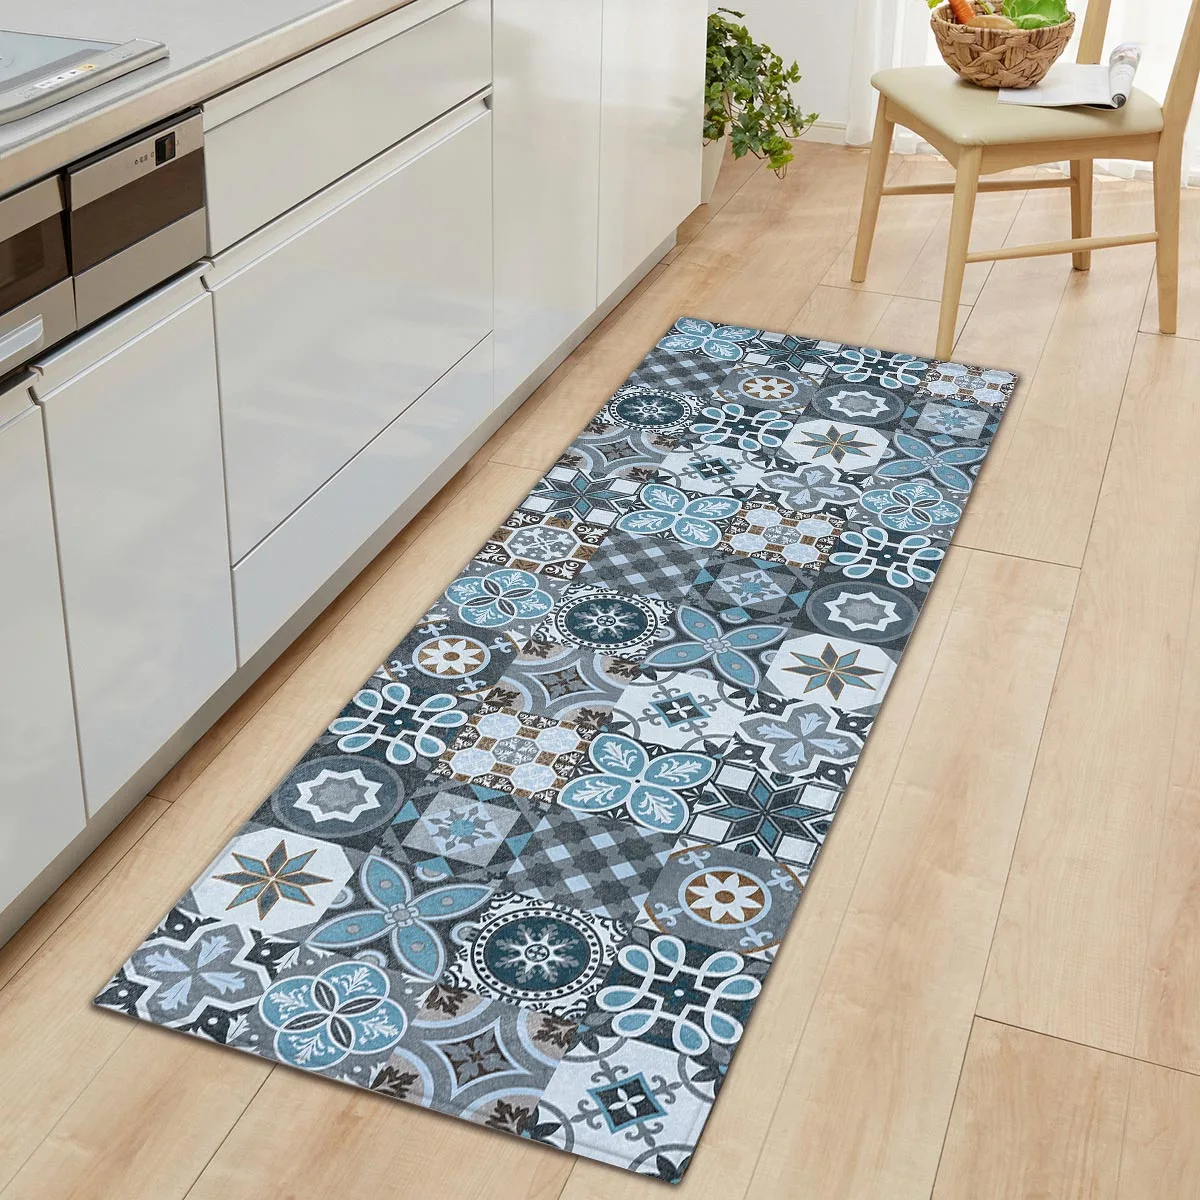 

Tiles Pattern Home Bath Mat Flannel Entrance Door Mat Non-slip Kitchen Carpet Home Soft Rugs for Living Room Kitchen Bedroom